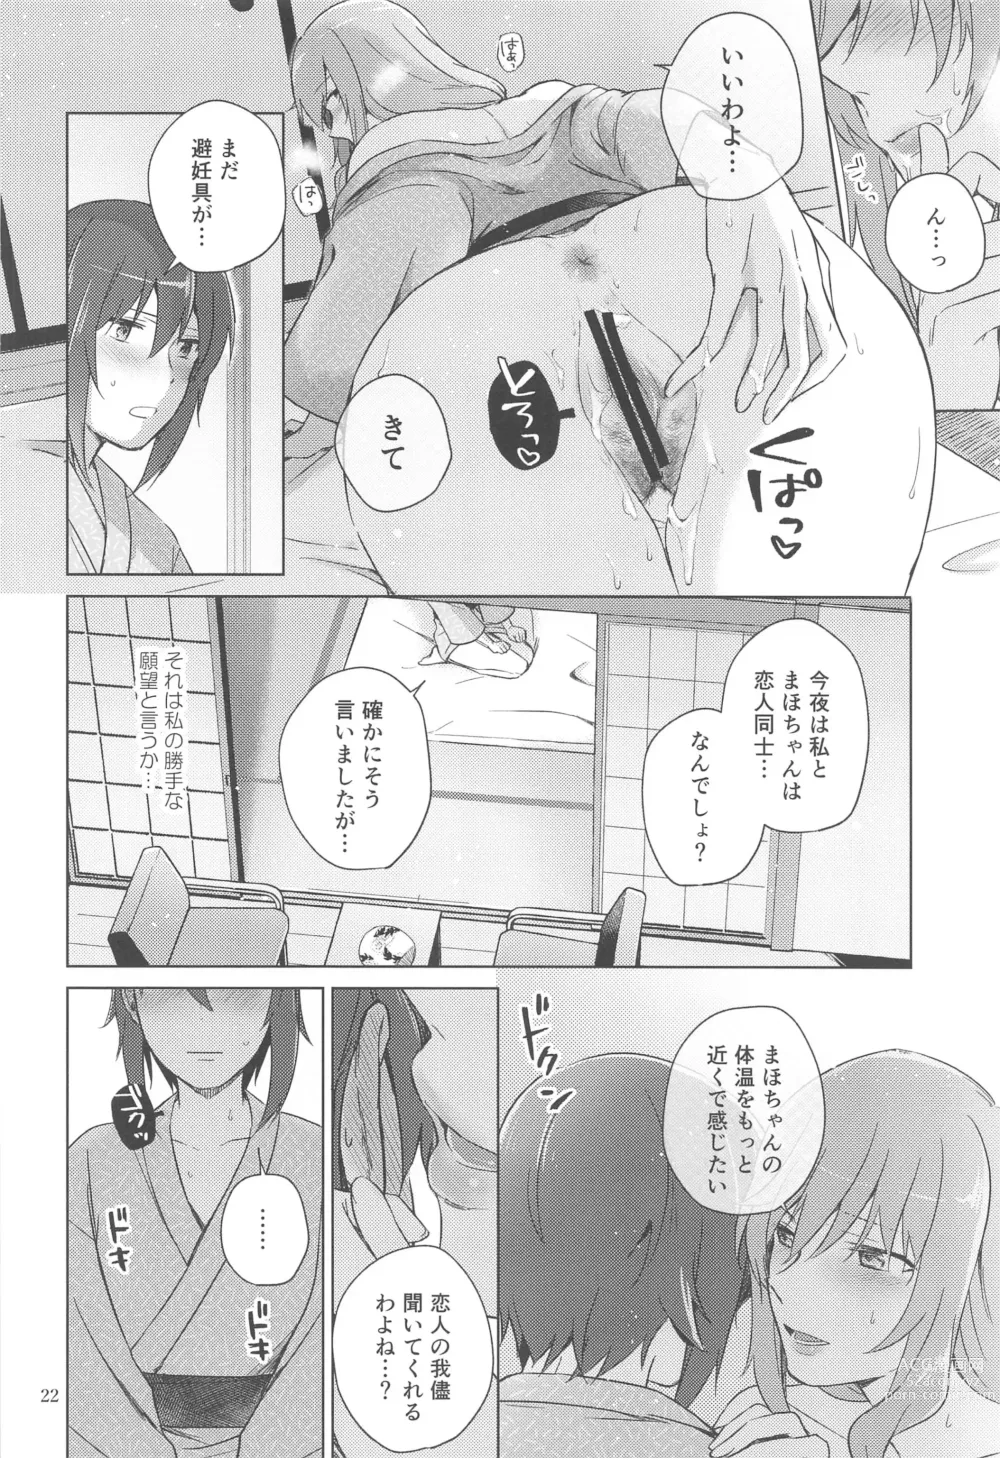 Page 21 of doujinshi Nishizumi to Shimada 2